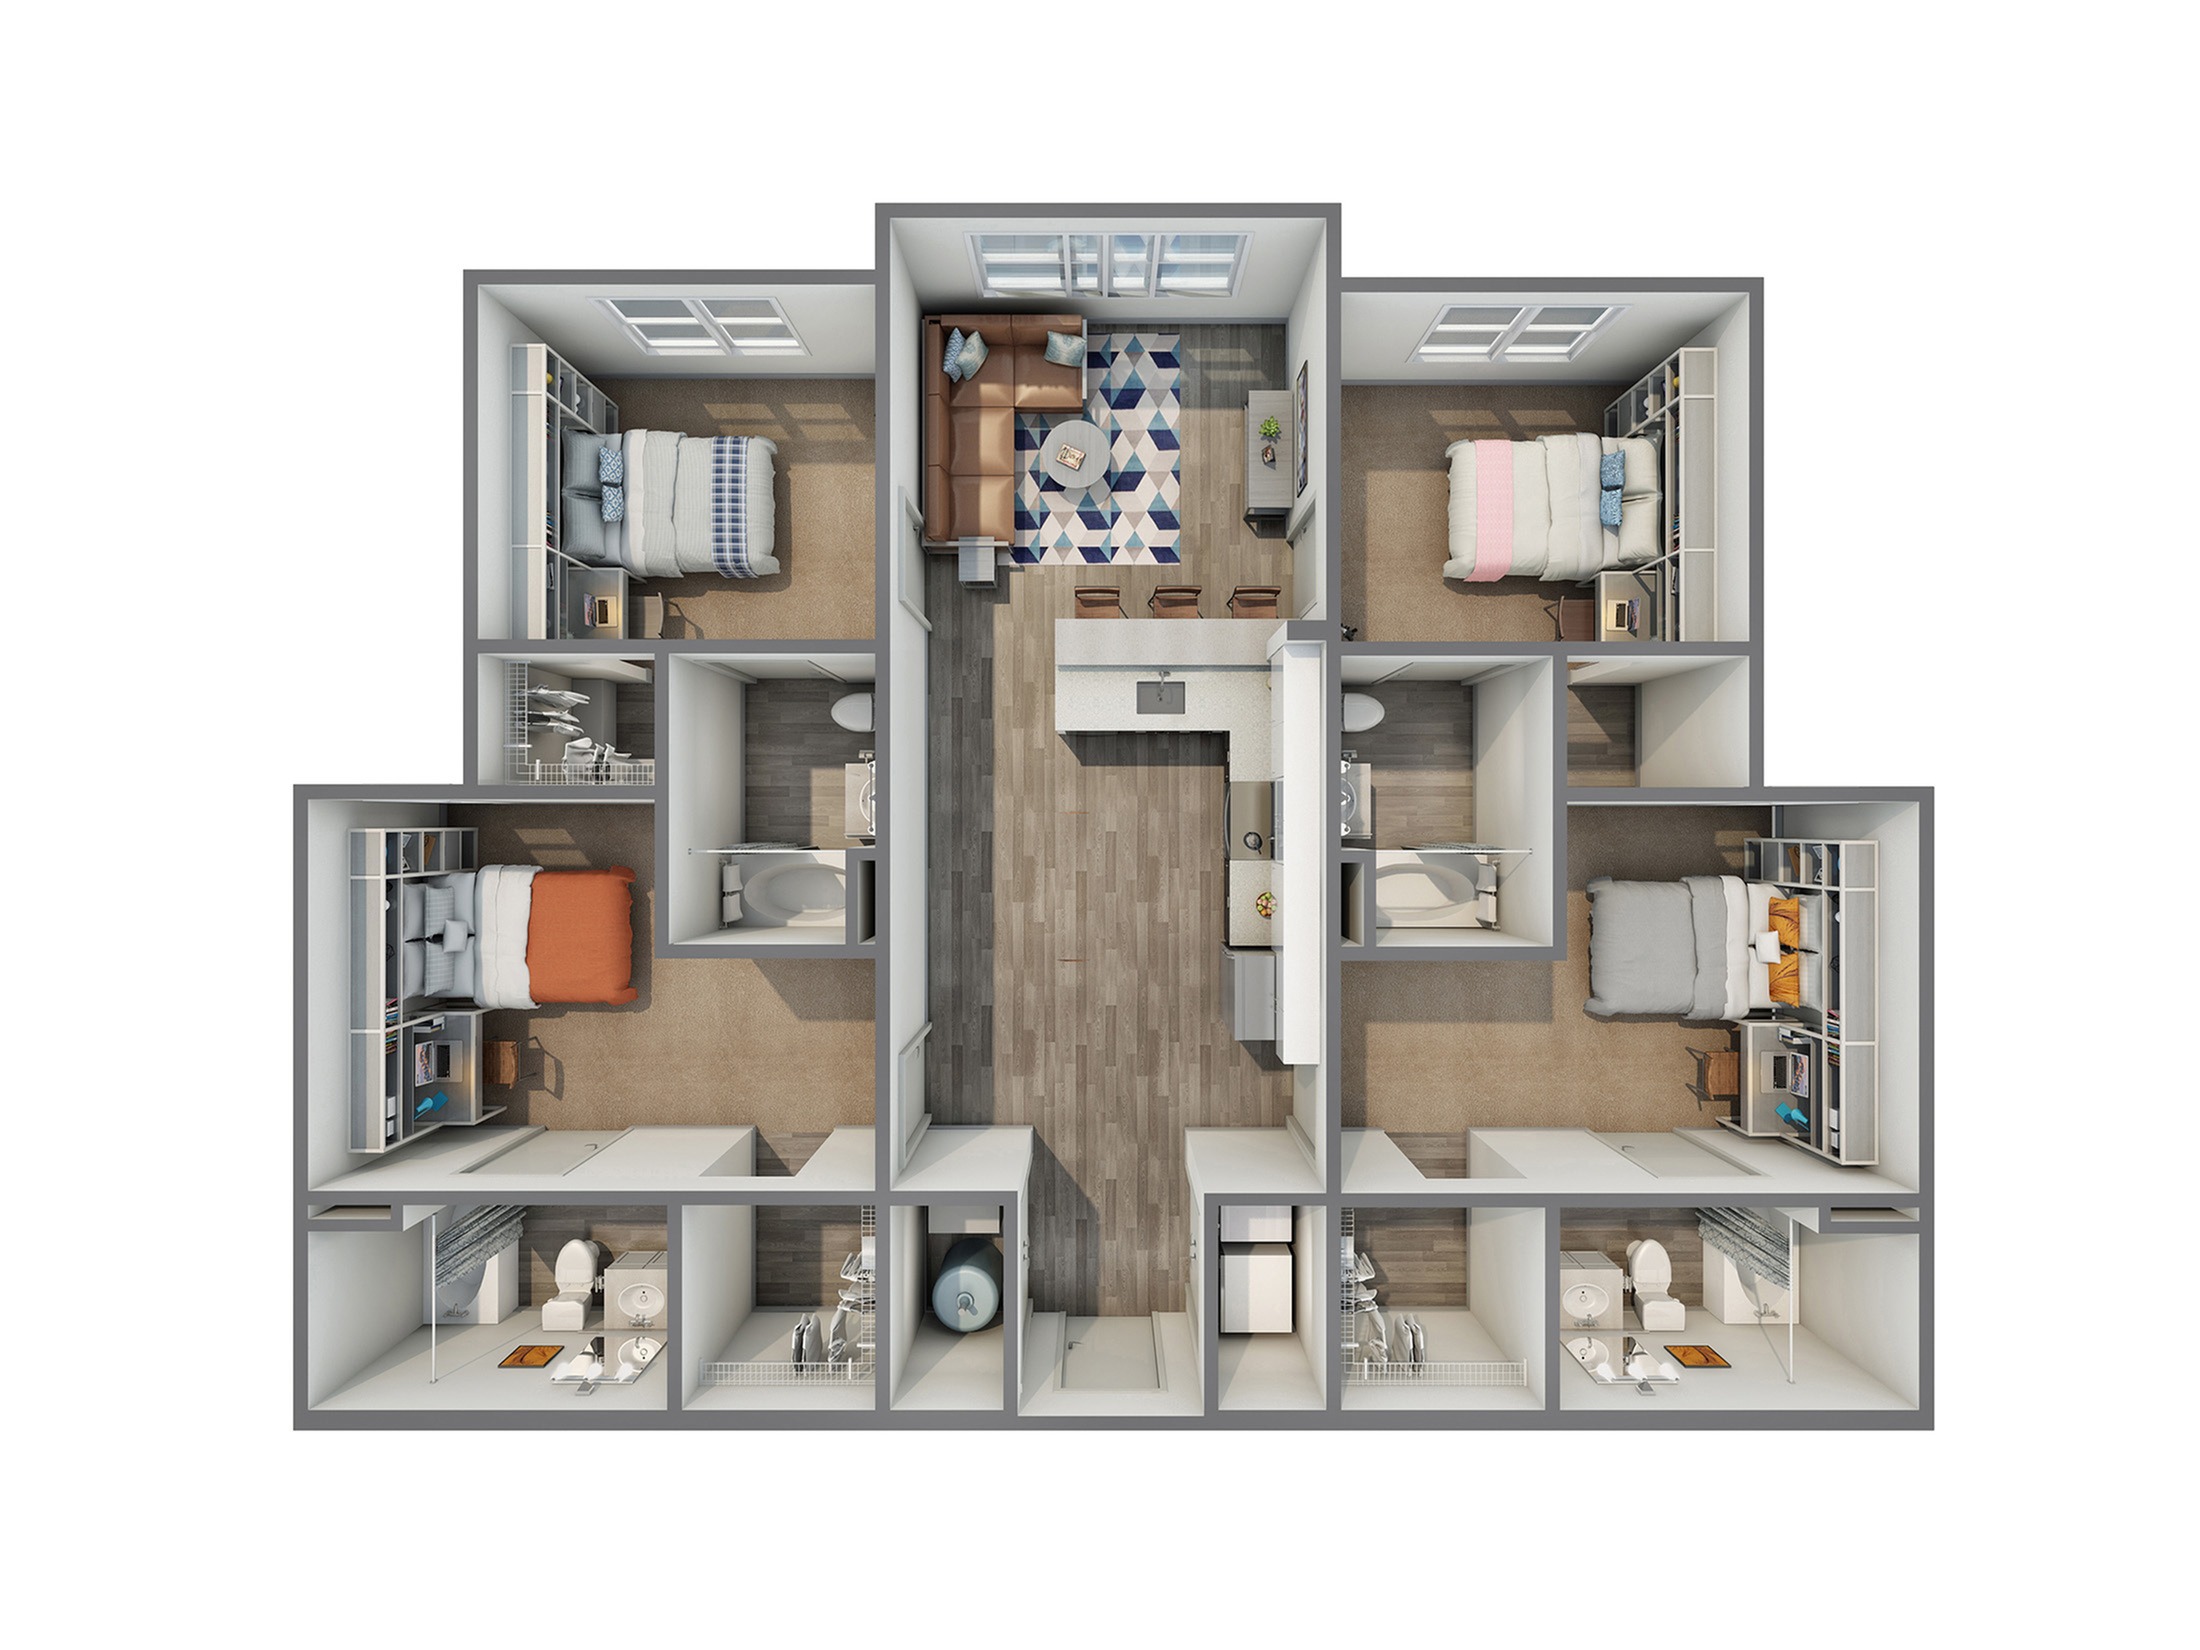 A 3D image of the 4BR/4BA – A floorplan, a 1340 squarefoot, 4 bed / 4 bath unit